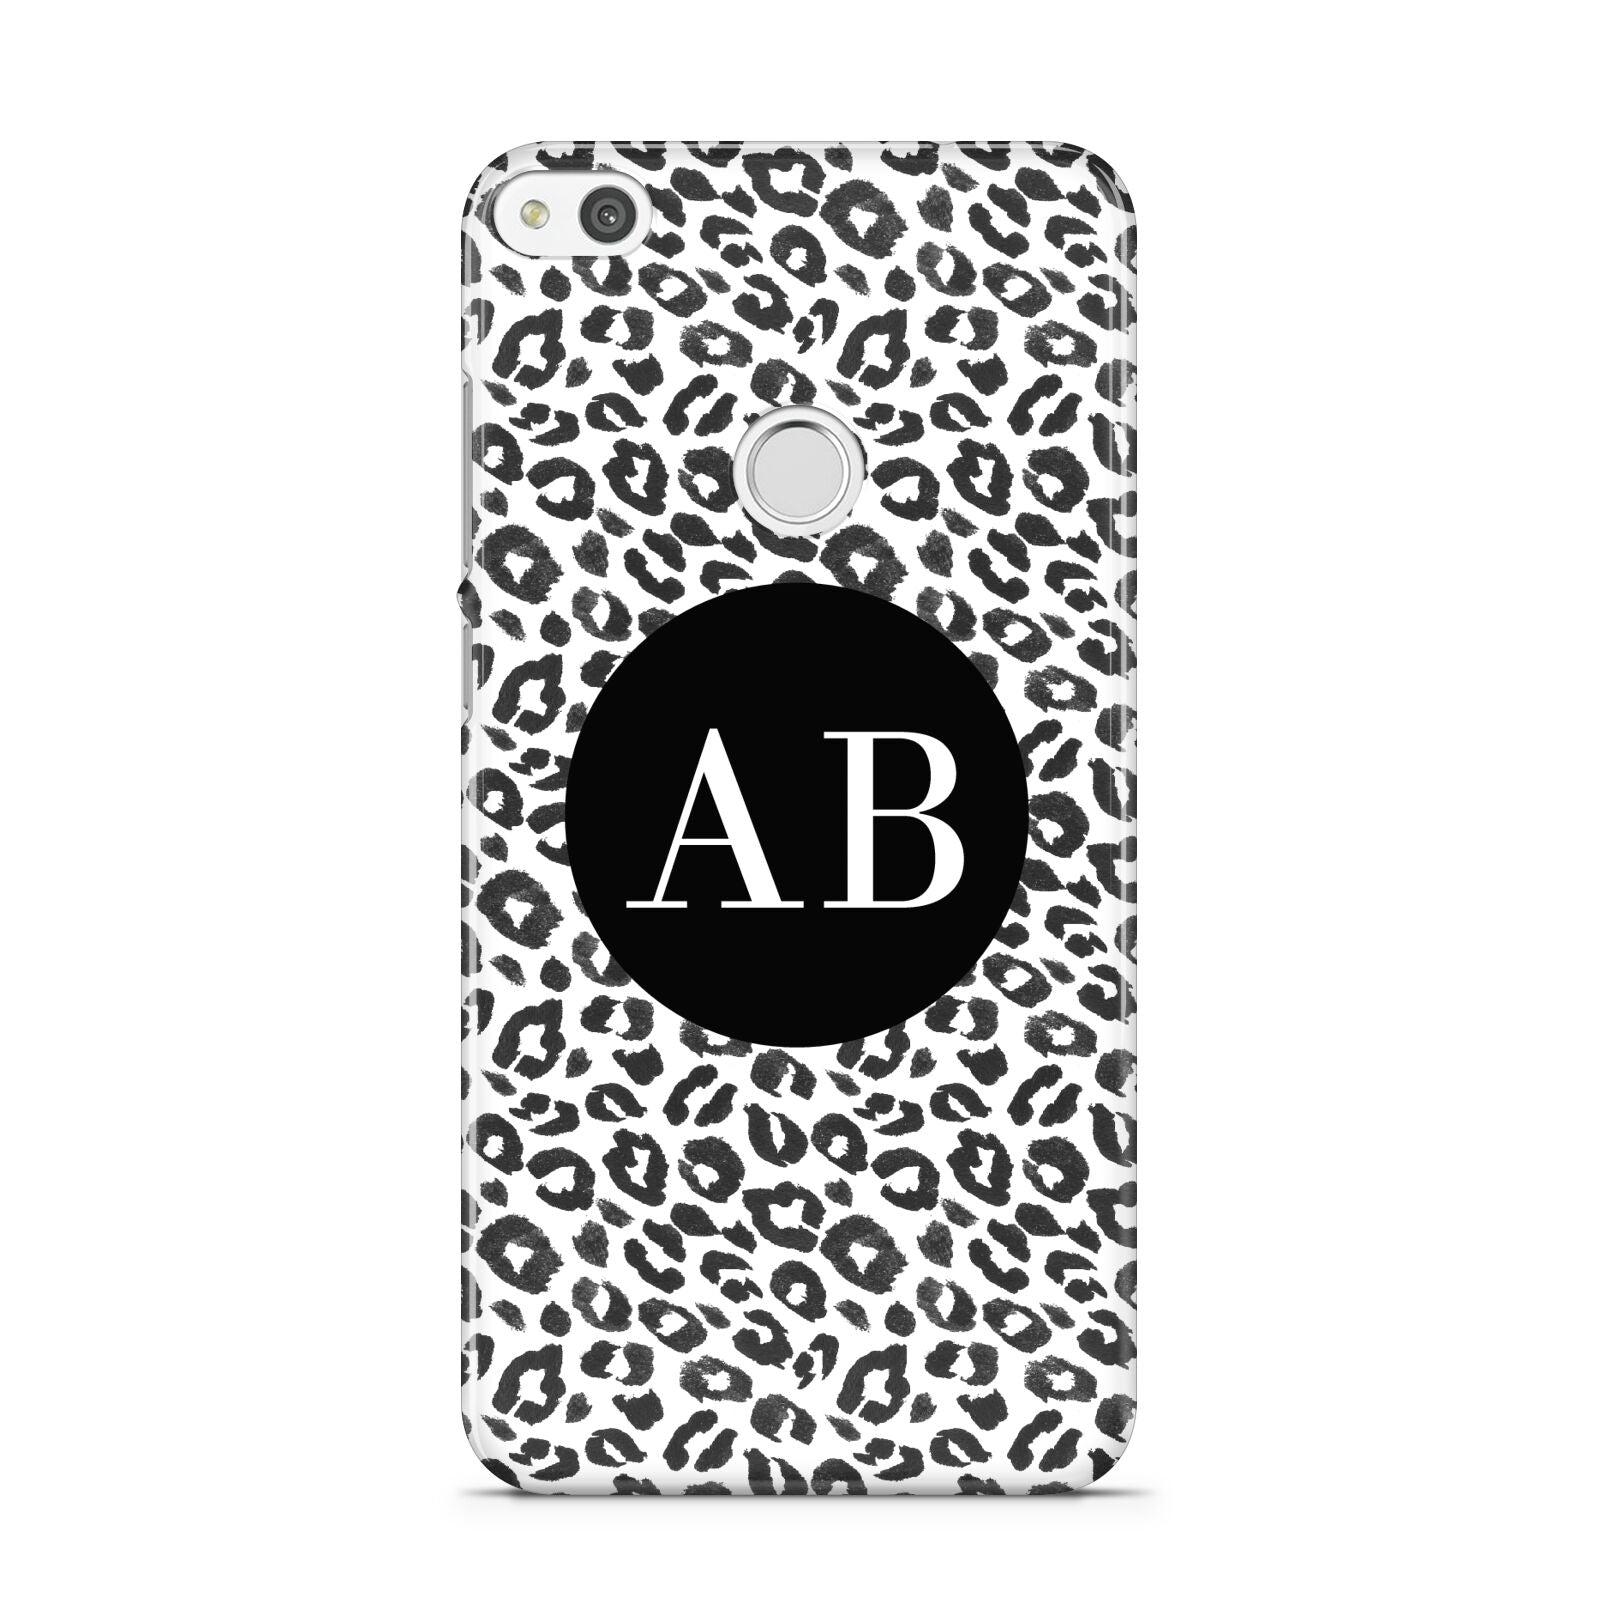 Leopard Print Black and White Huawei P8 Lite Case